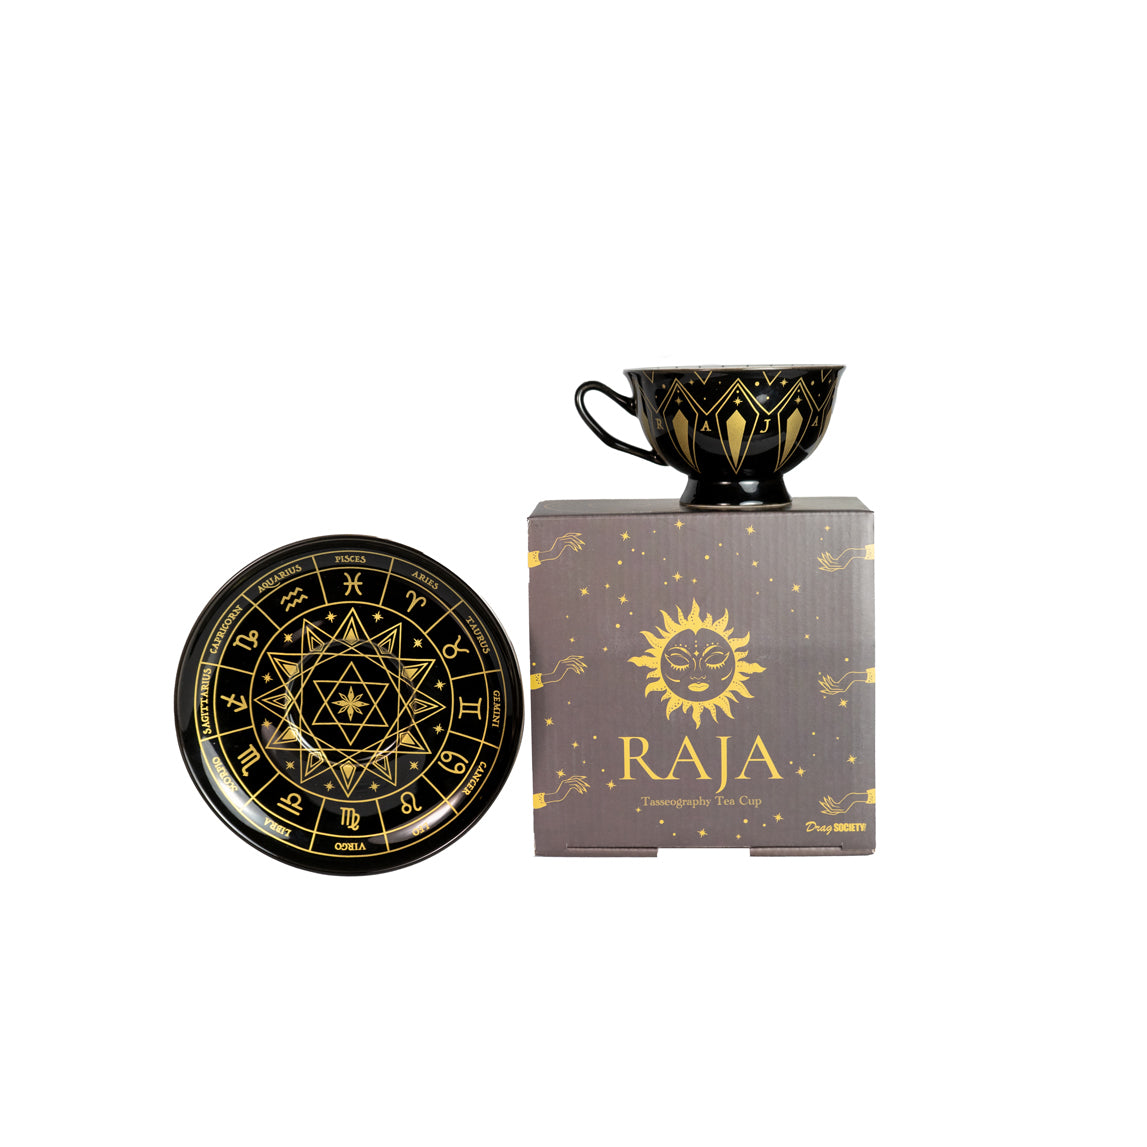 Raja's Tasseography Tea Cup Set